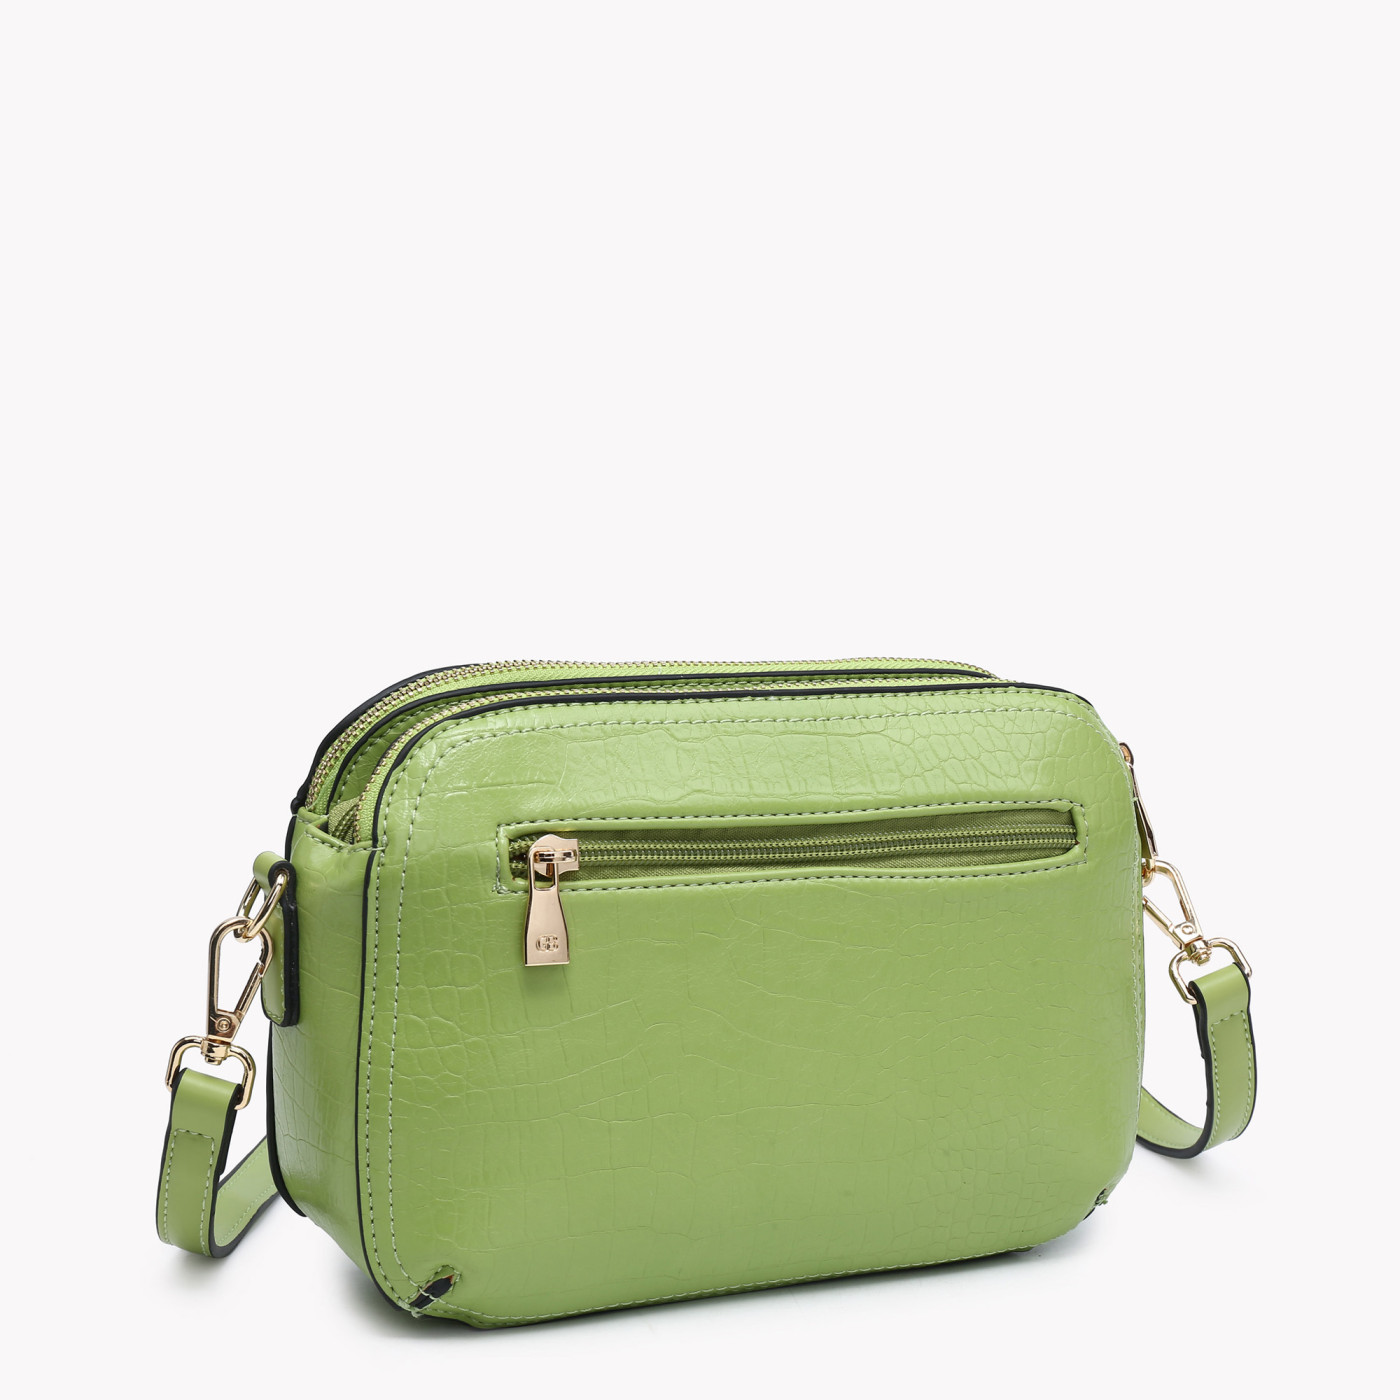 GB Small Crossbody Bags & Handbags for Women for sale | eBay